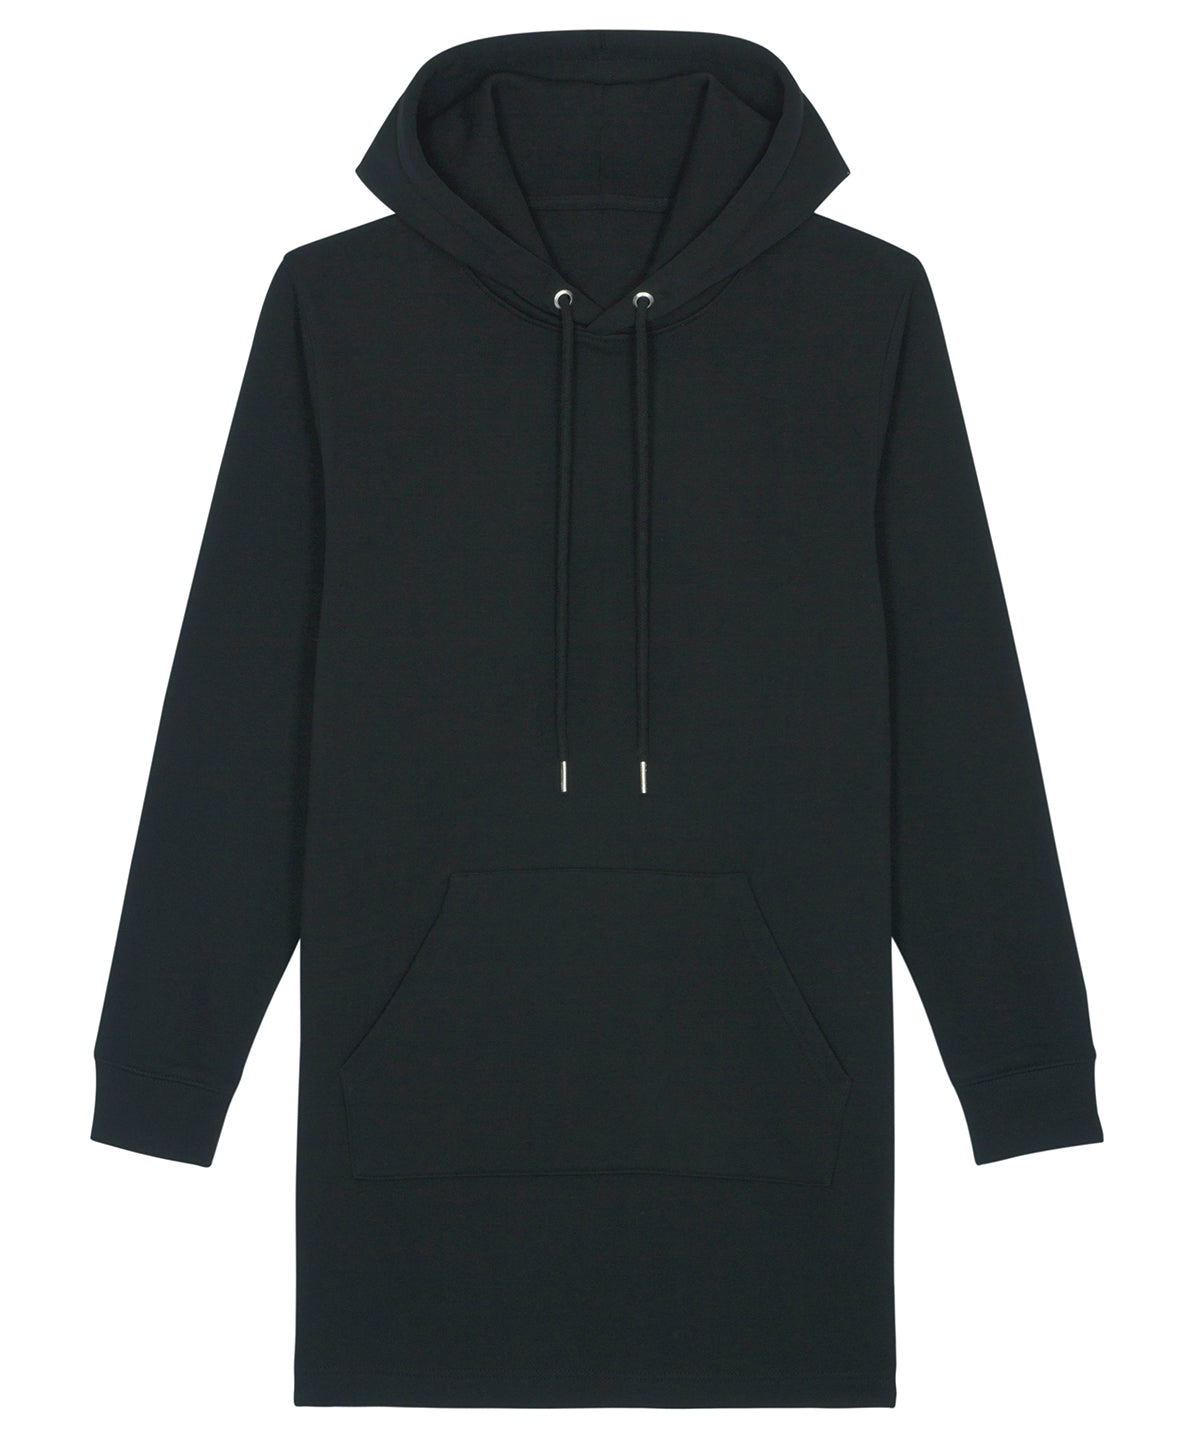 Stella Streeter women's hoodie dress (STDW143)